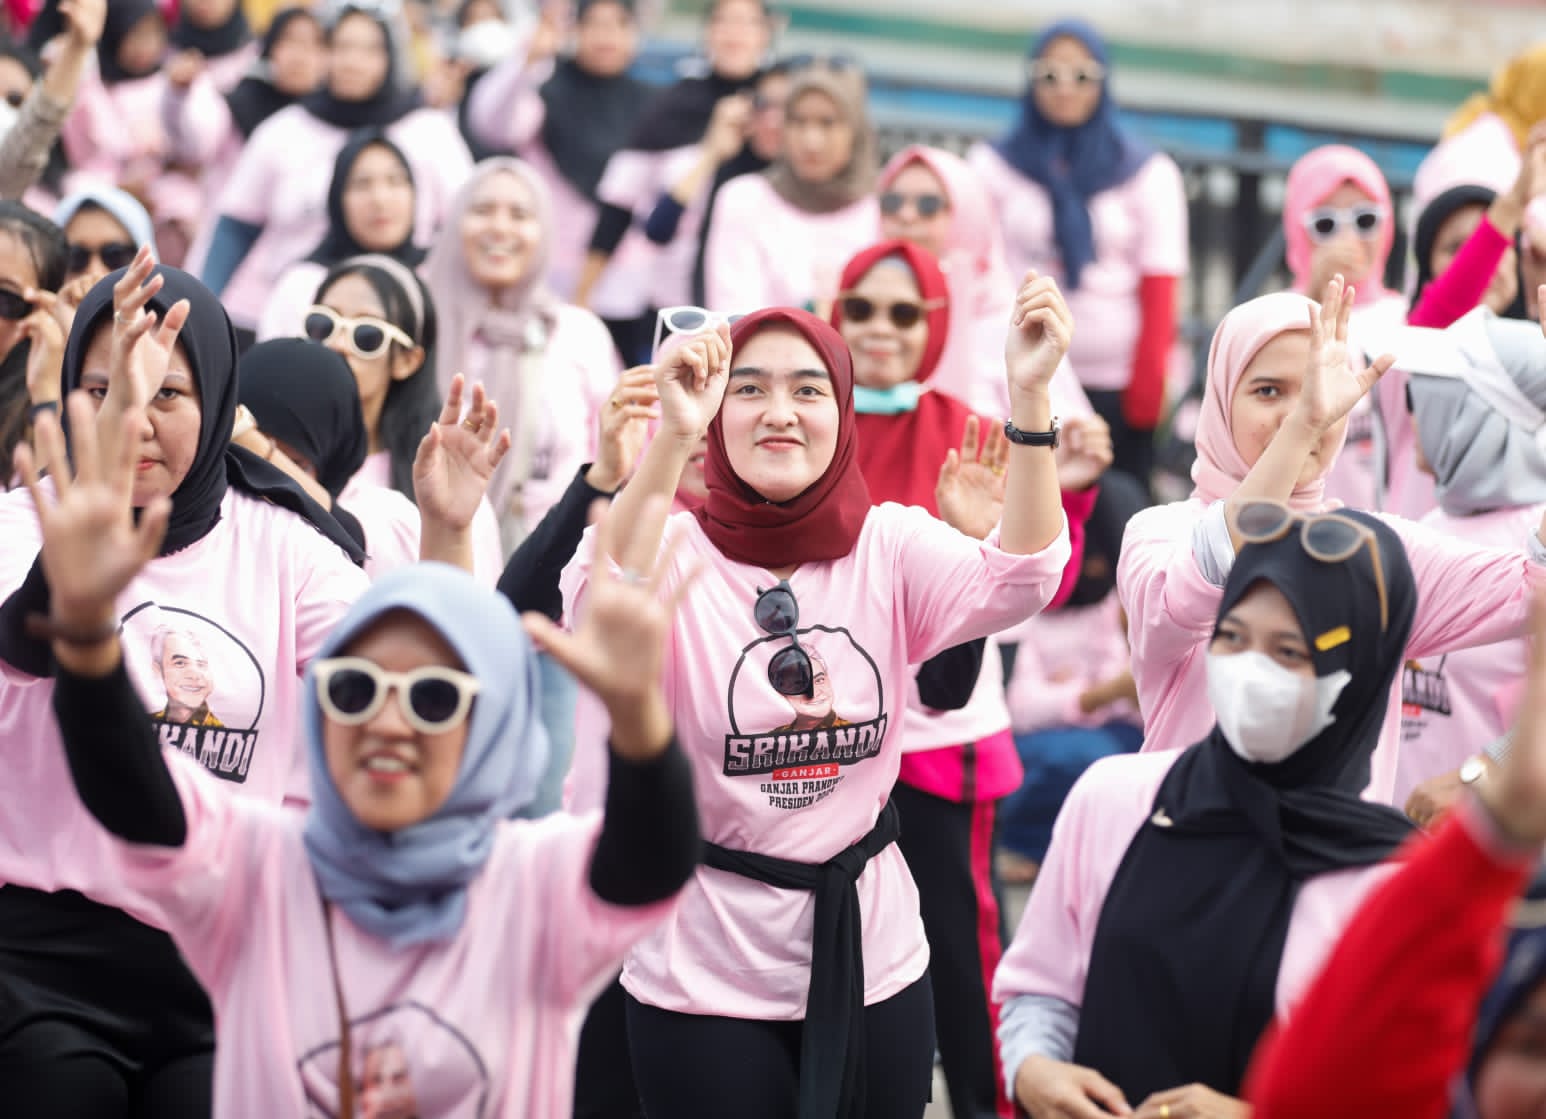 Pecah! Ribuan Srikandi Lampung Dukung Ganjar lewat Cinta, Rasa, dan Warna Milenial